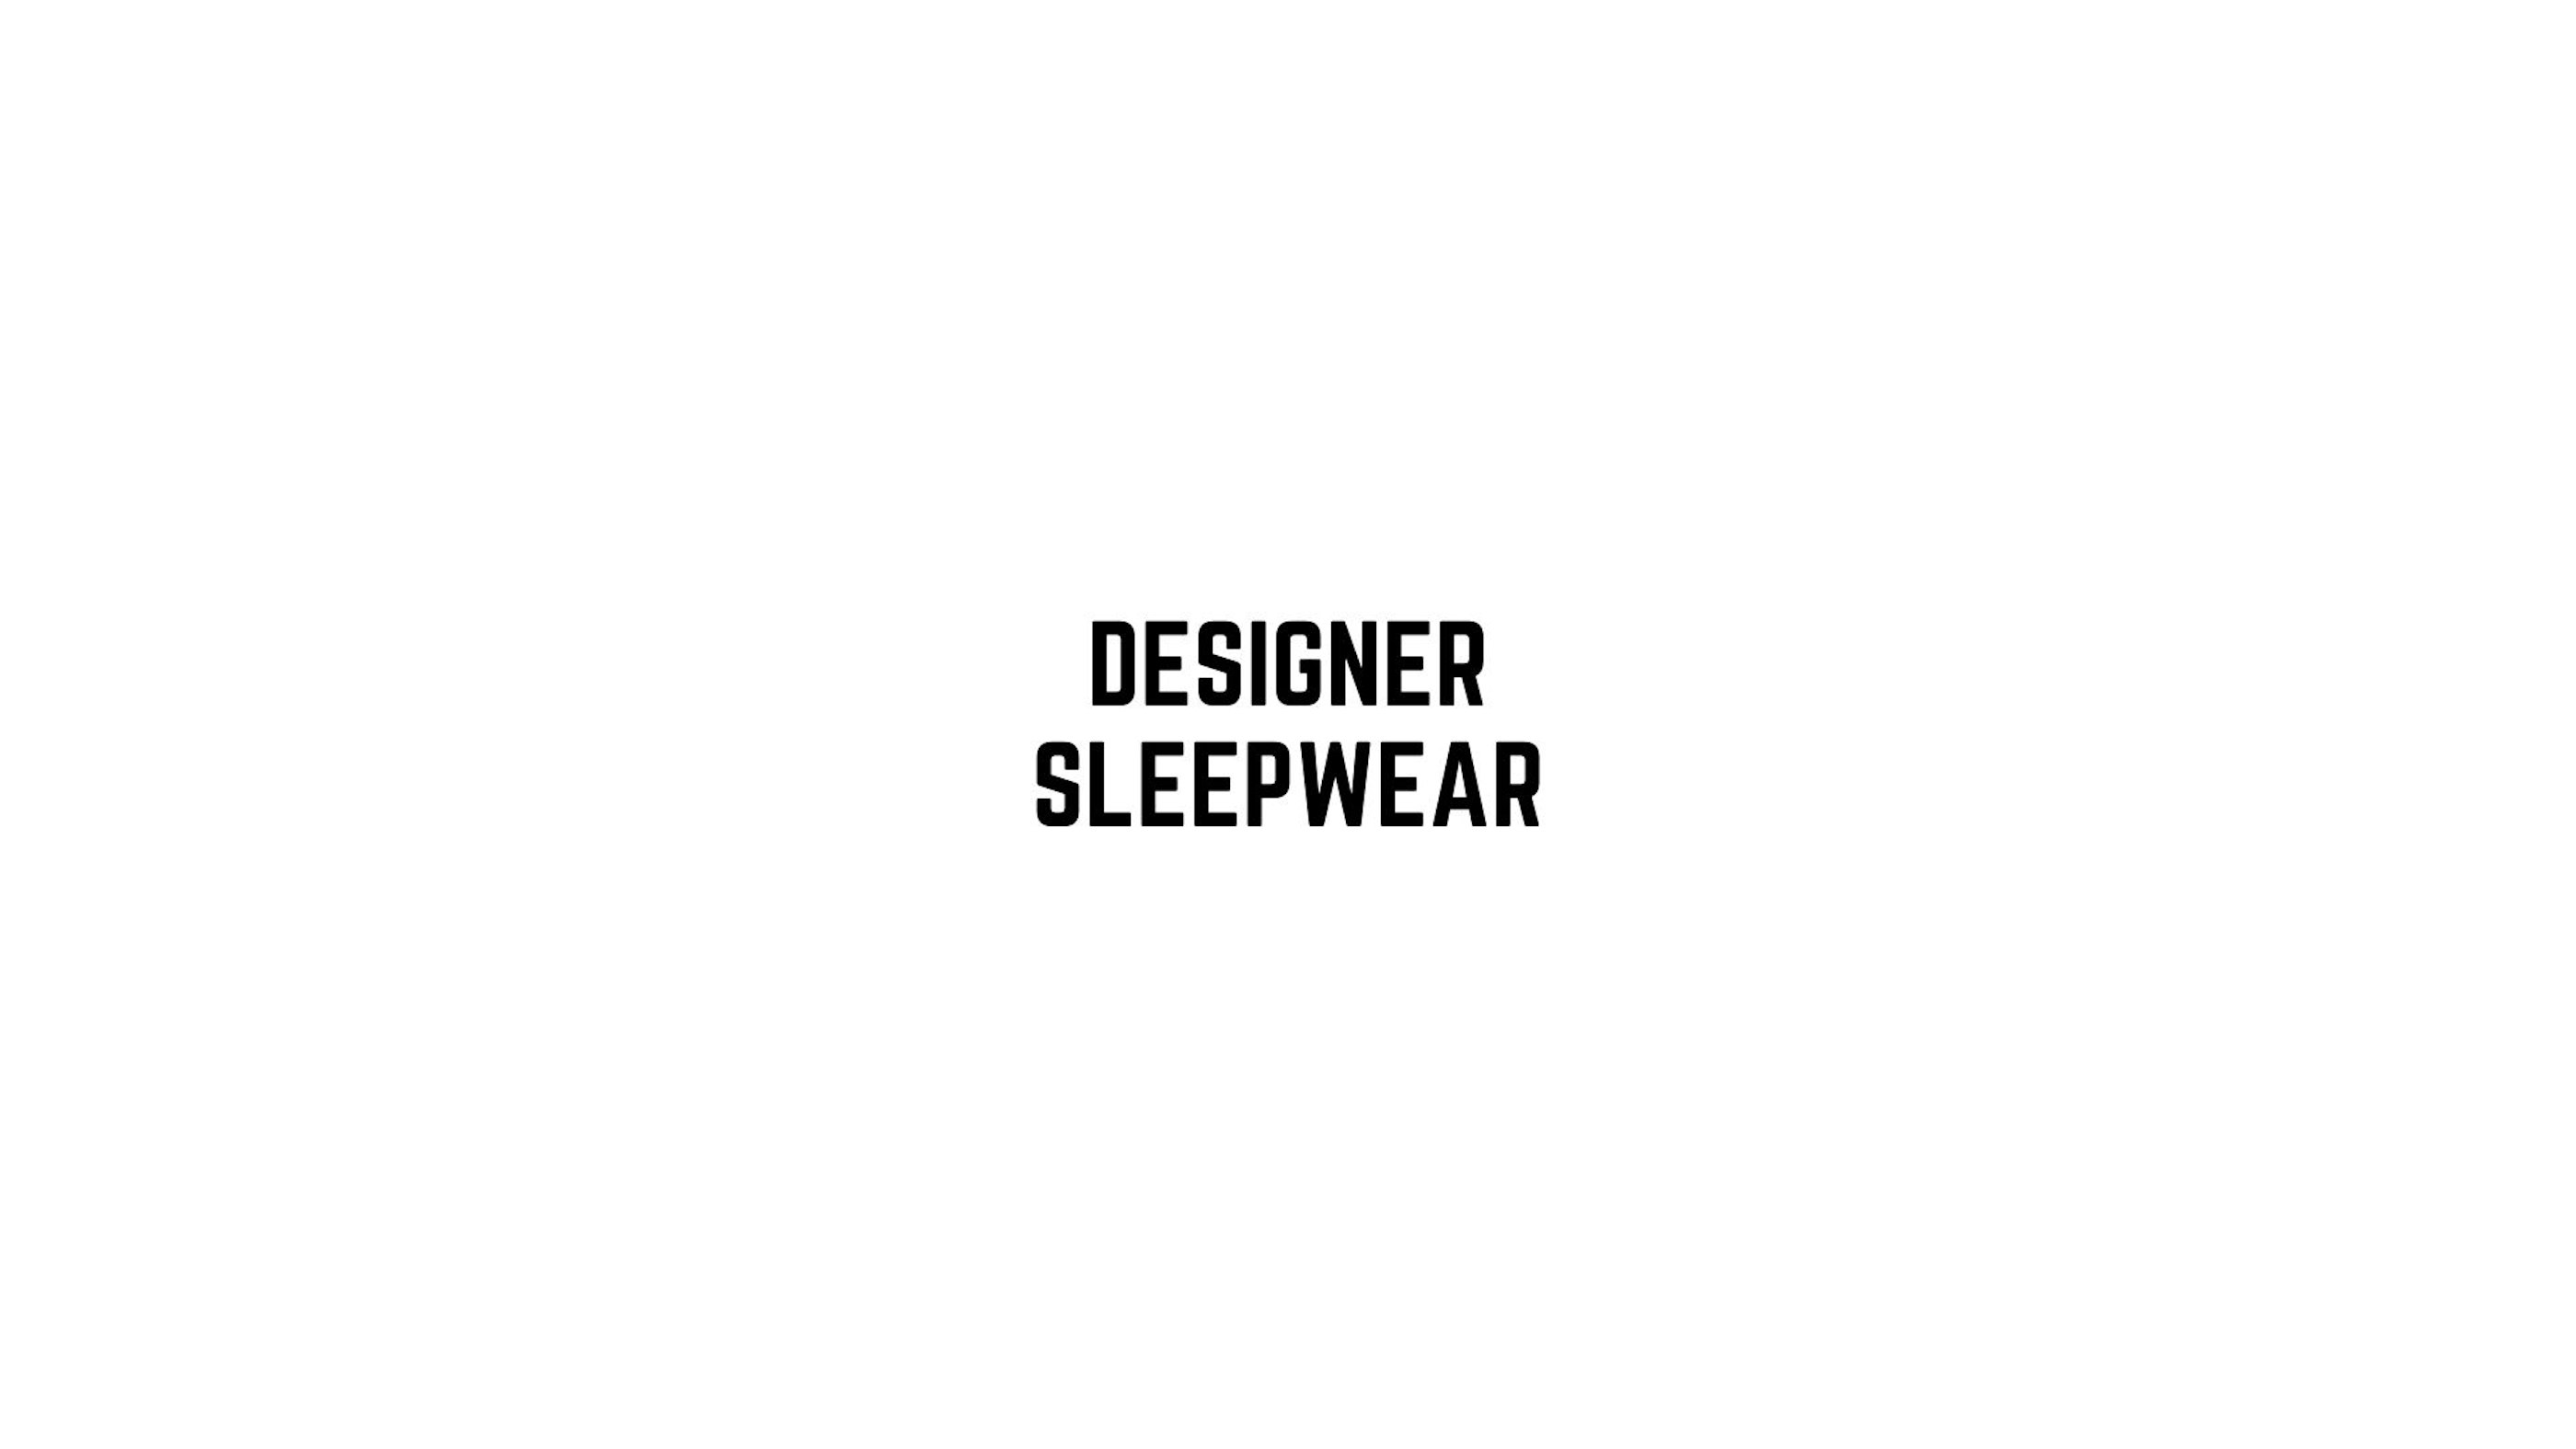 Designer sleepwear sale